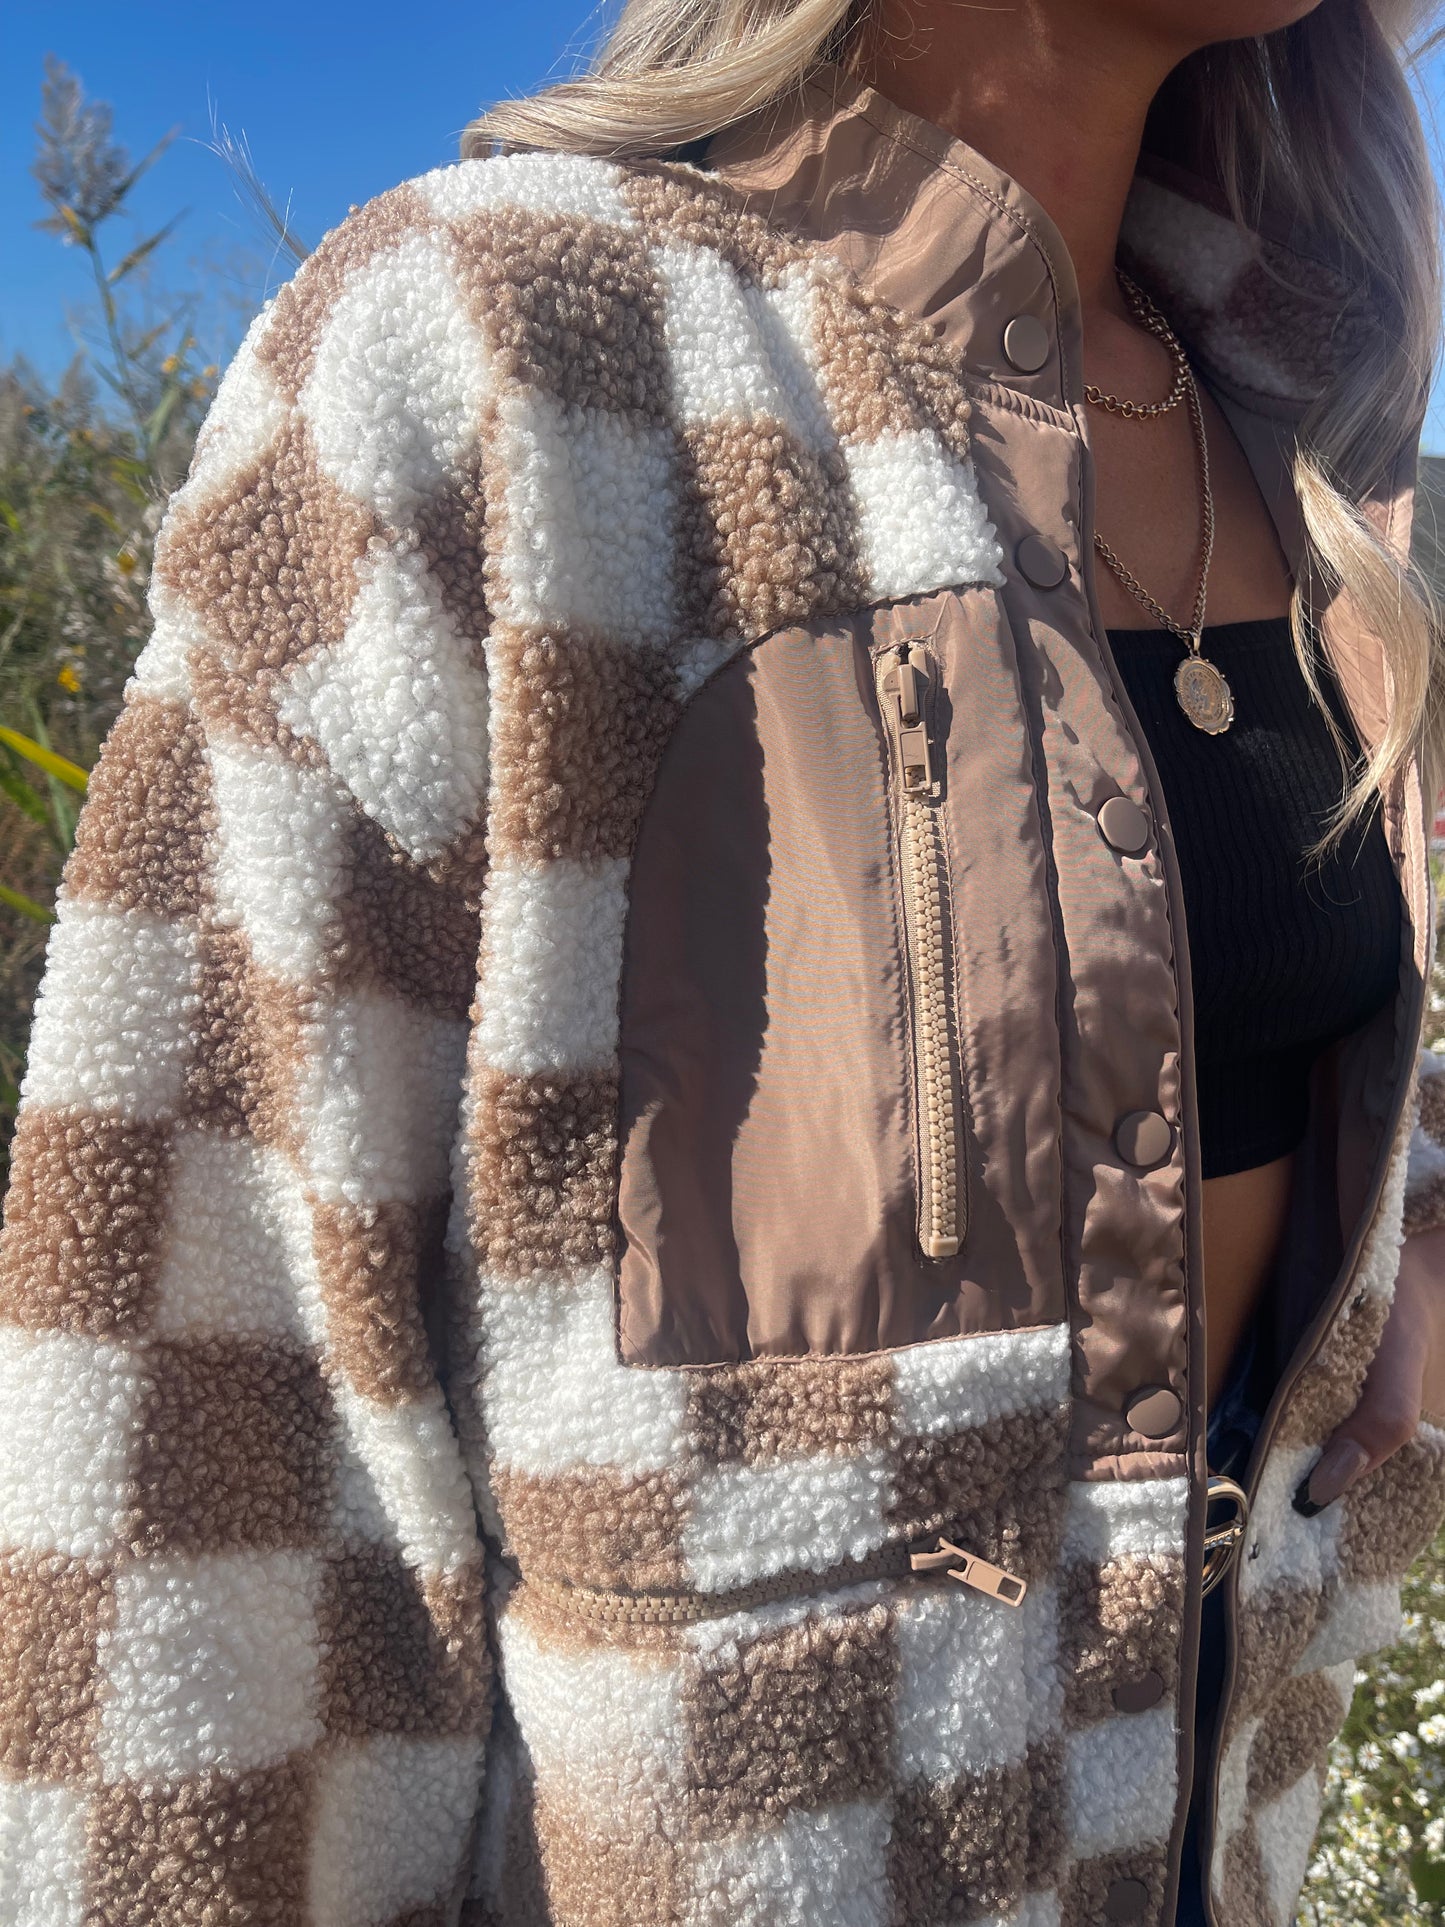 Checkered Fleece Jacket